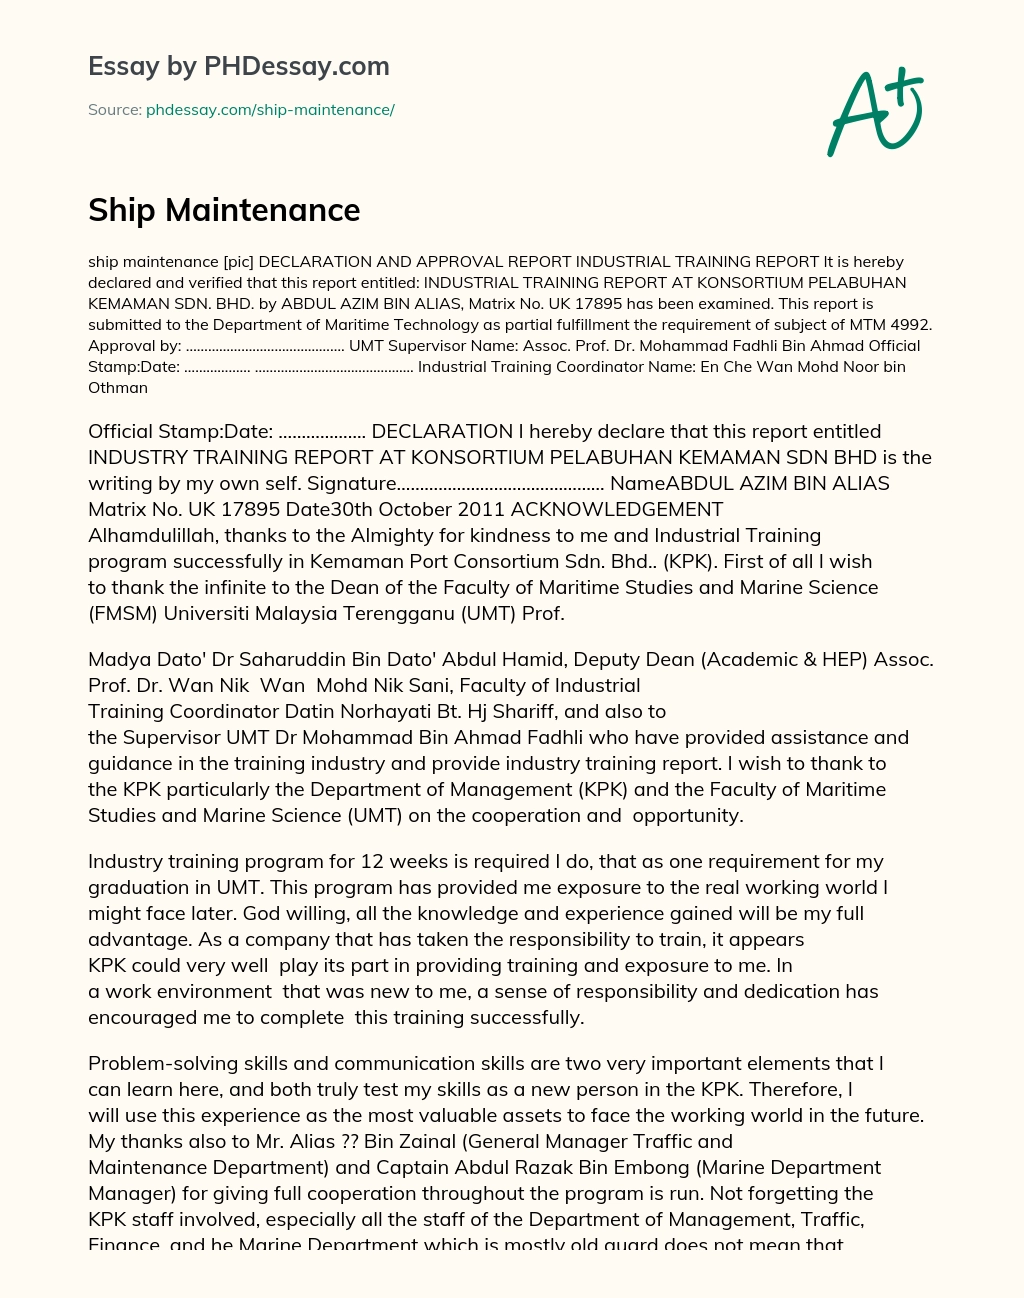 Ship Maintenance essay